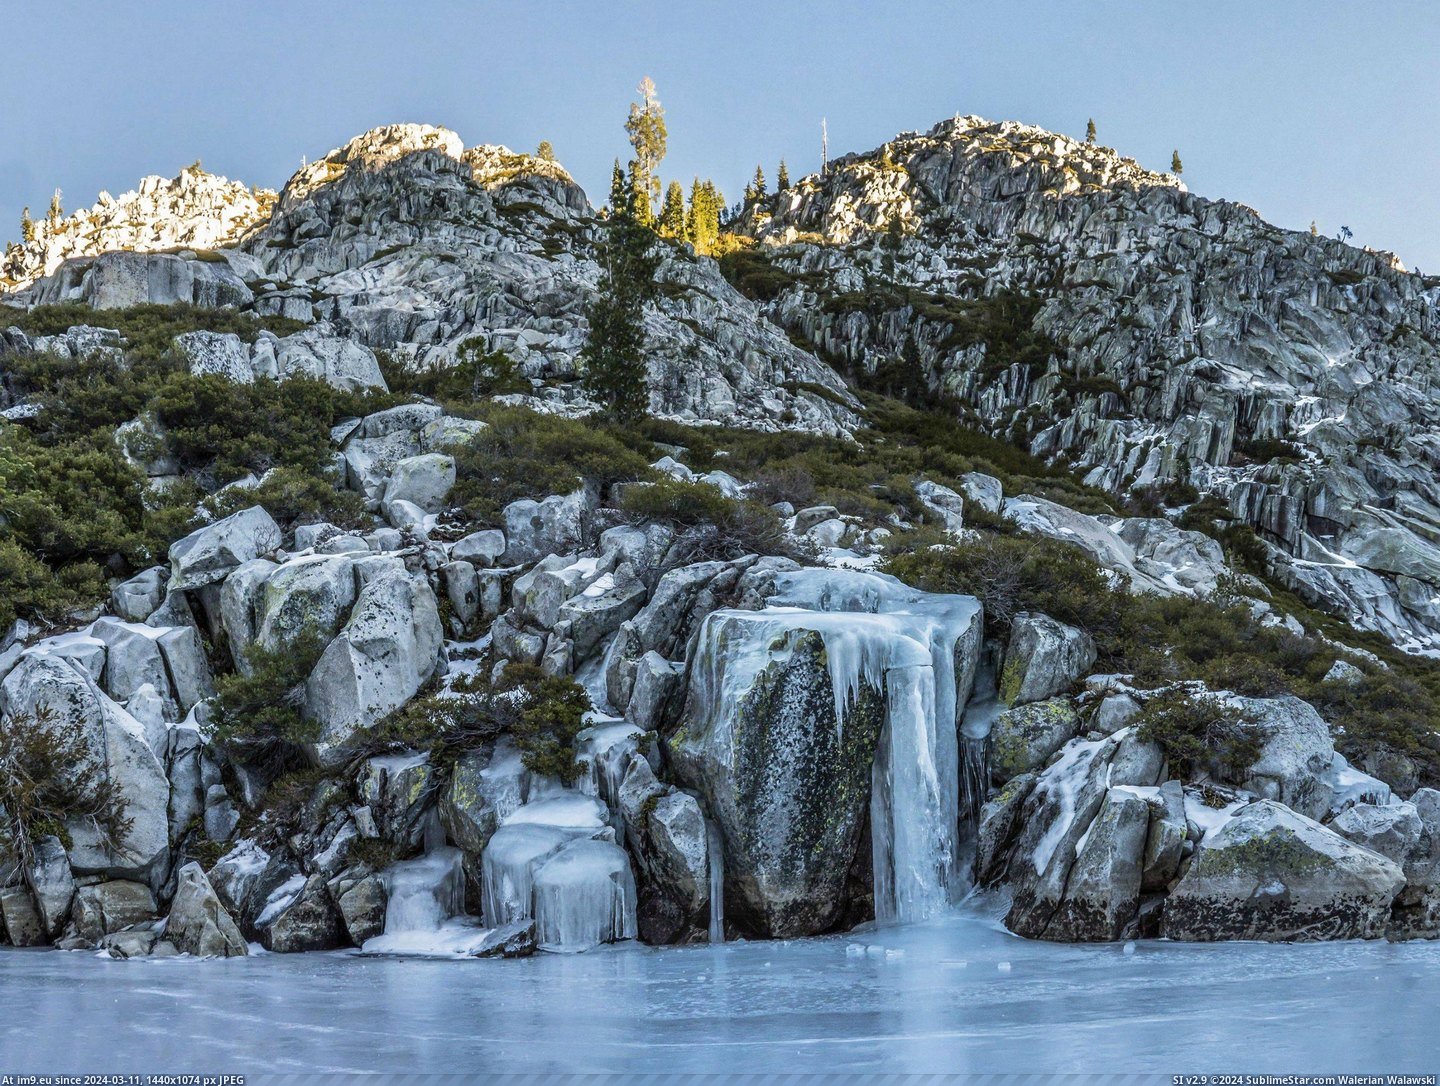 #Big #Lake #Bear #Trinity #Shore #Wilderness #2700x2025 #Frozen #Waterfall #Alps [Earthporn] 'Frozen Waterfall' at the shore of Big Bear Lake in the Trinity Alps Wilderness [OC][2700x2025] Pic. (Obraz z album My r/EARTHPORN favs))